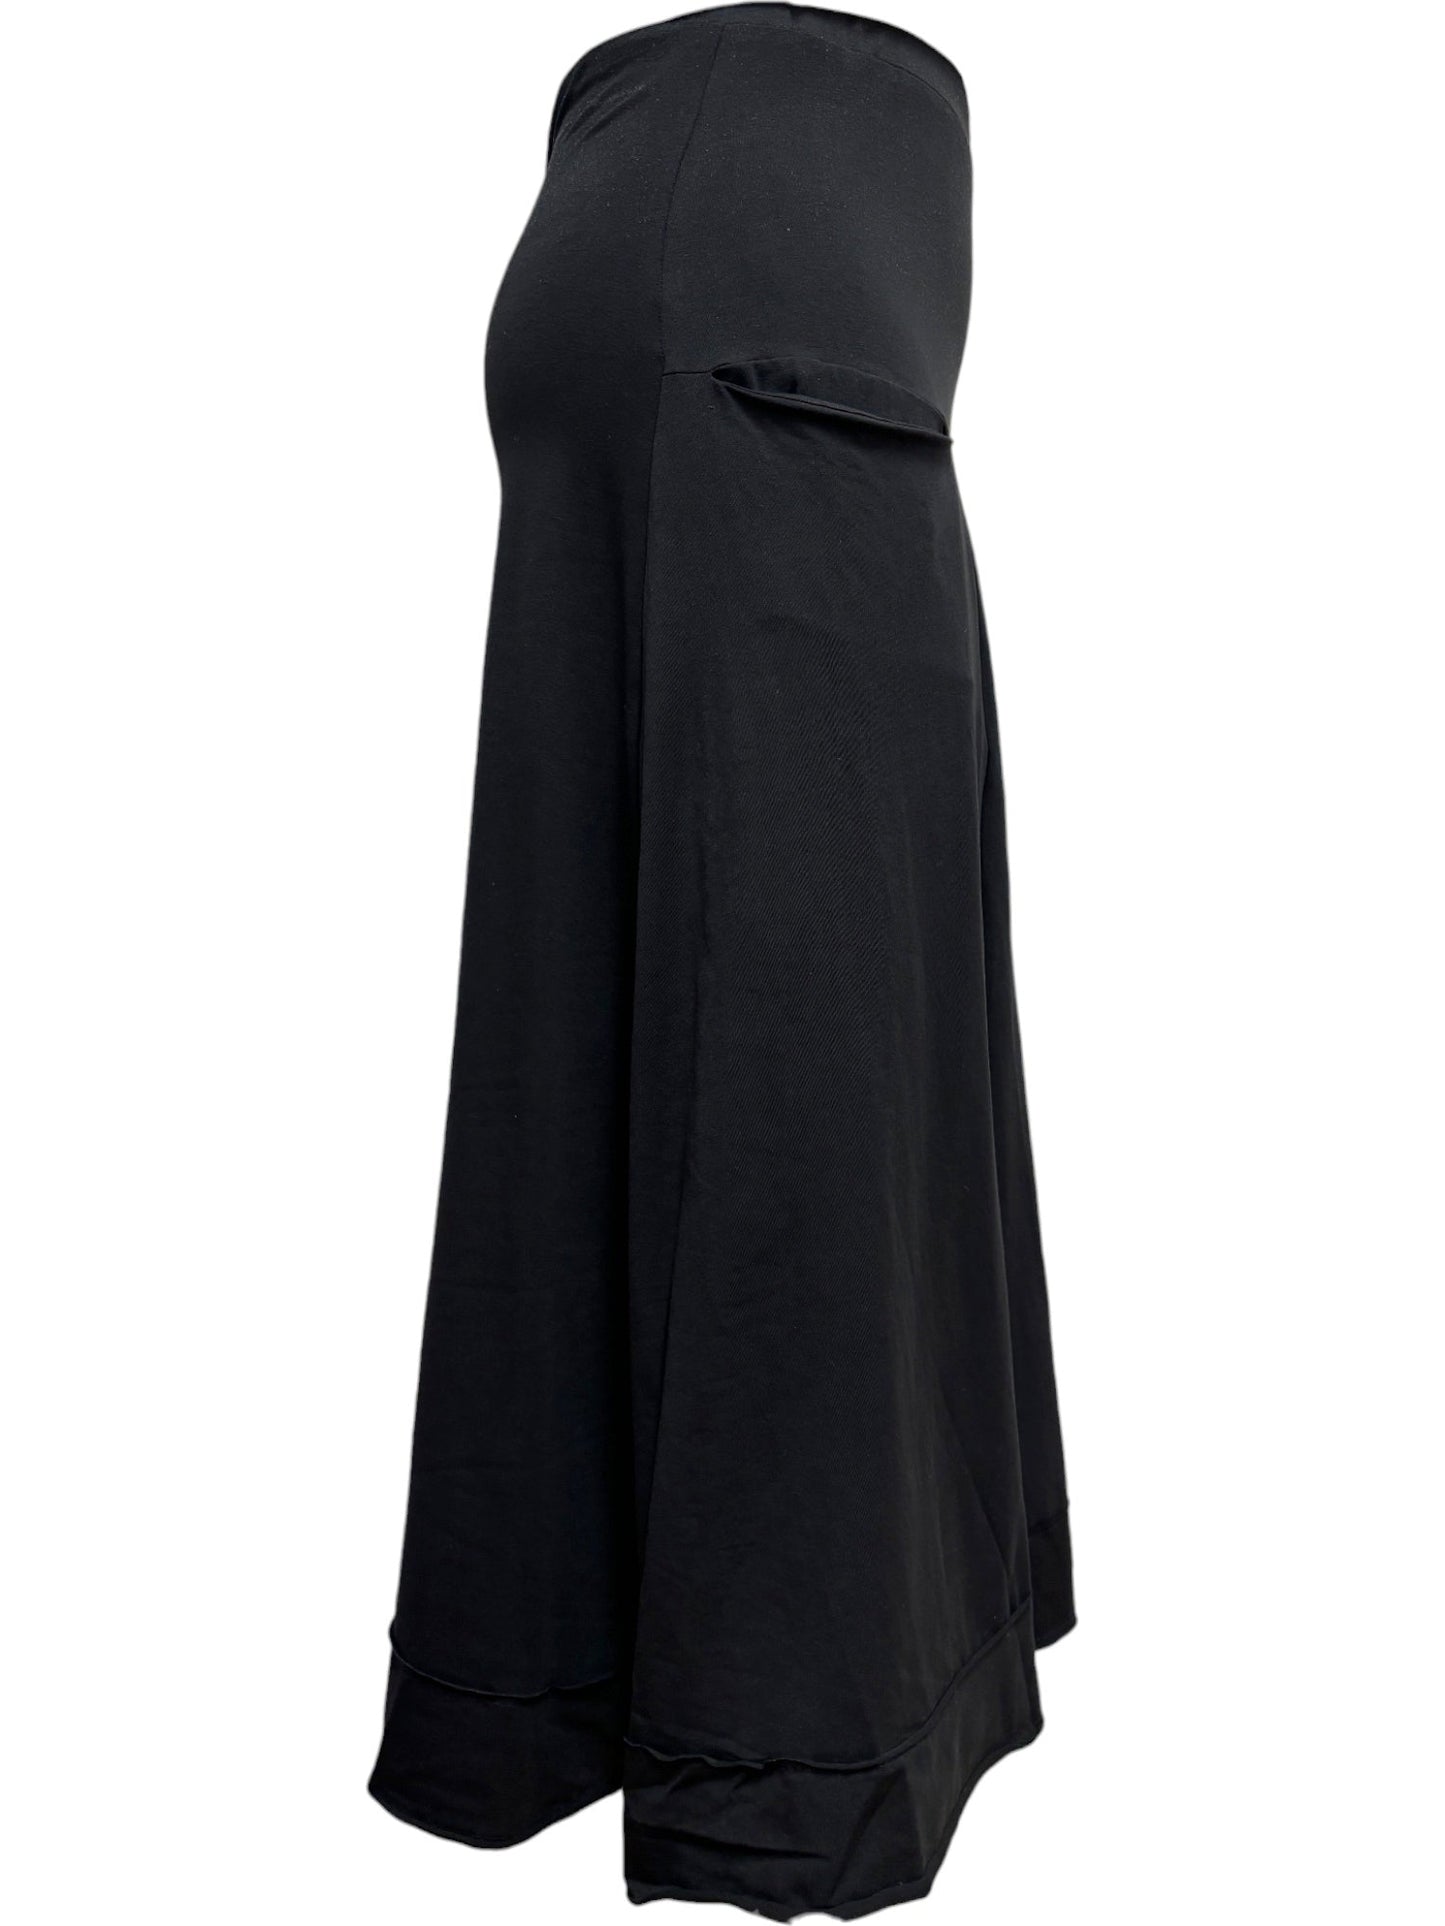 Payton Skirt in Solid Black